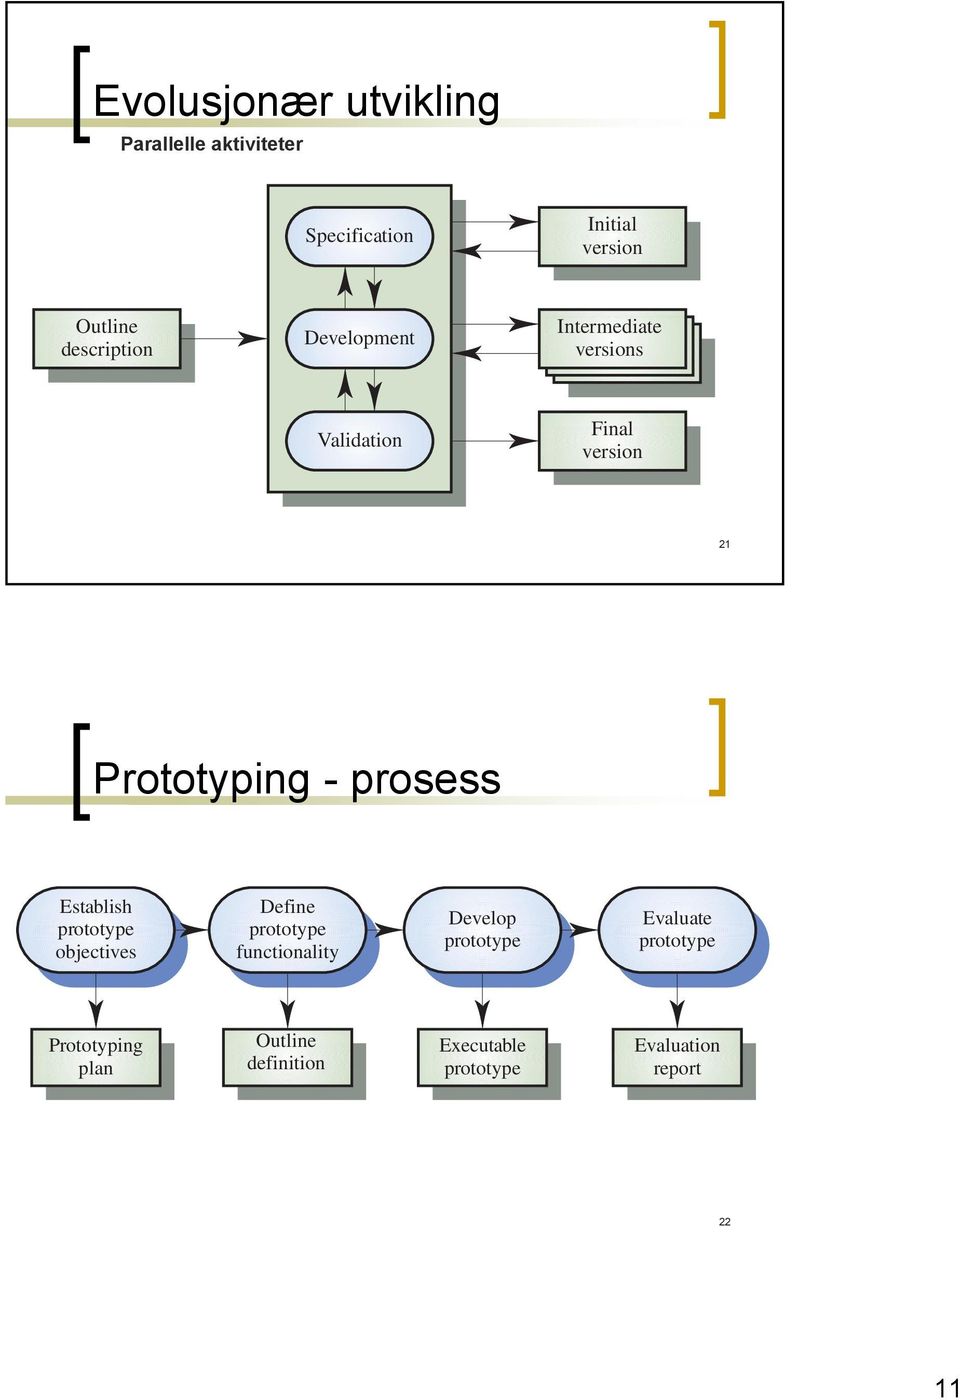 prosess Establish prototype objectives Define prototype functionality Develop prototype